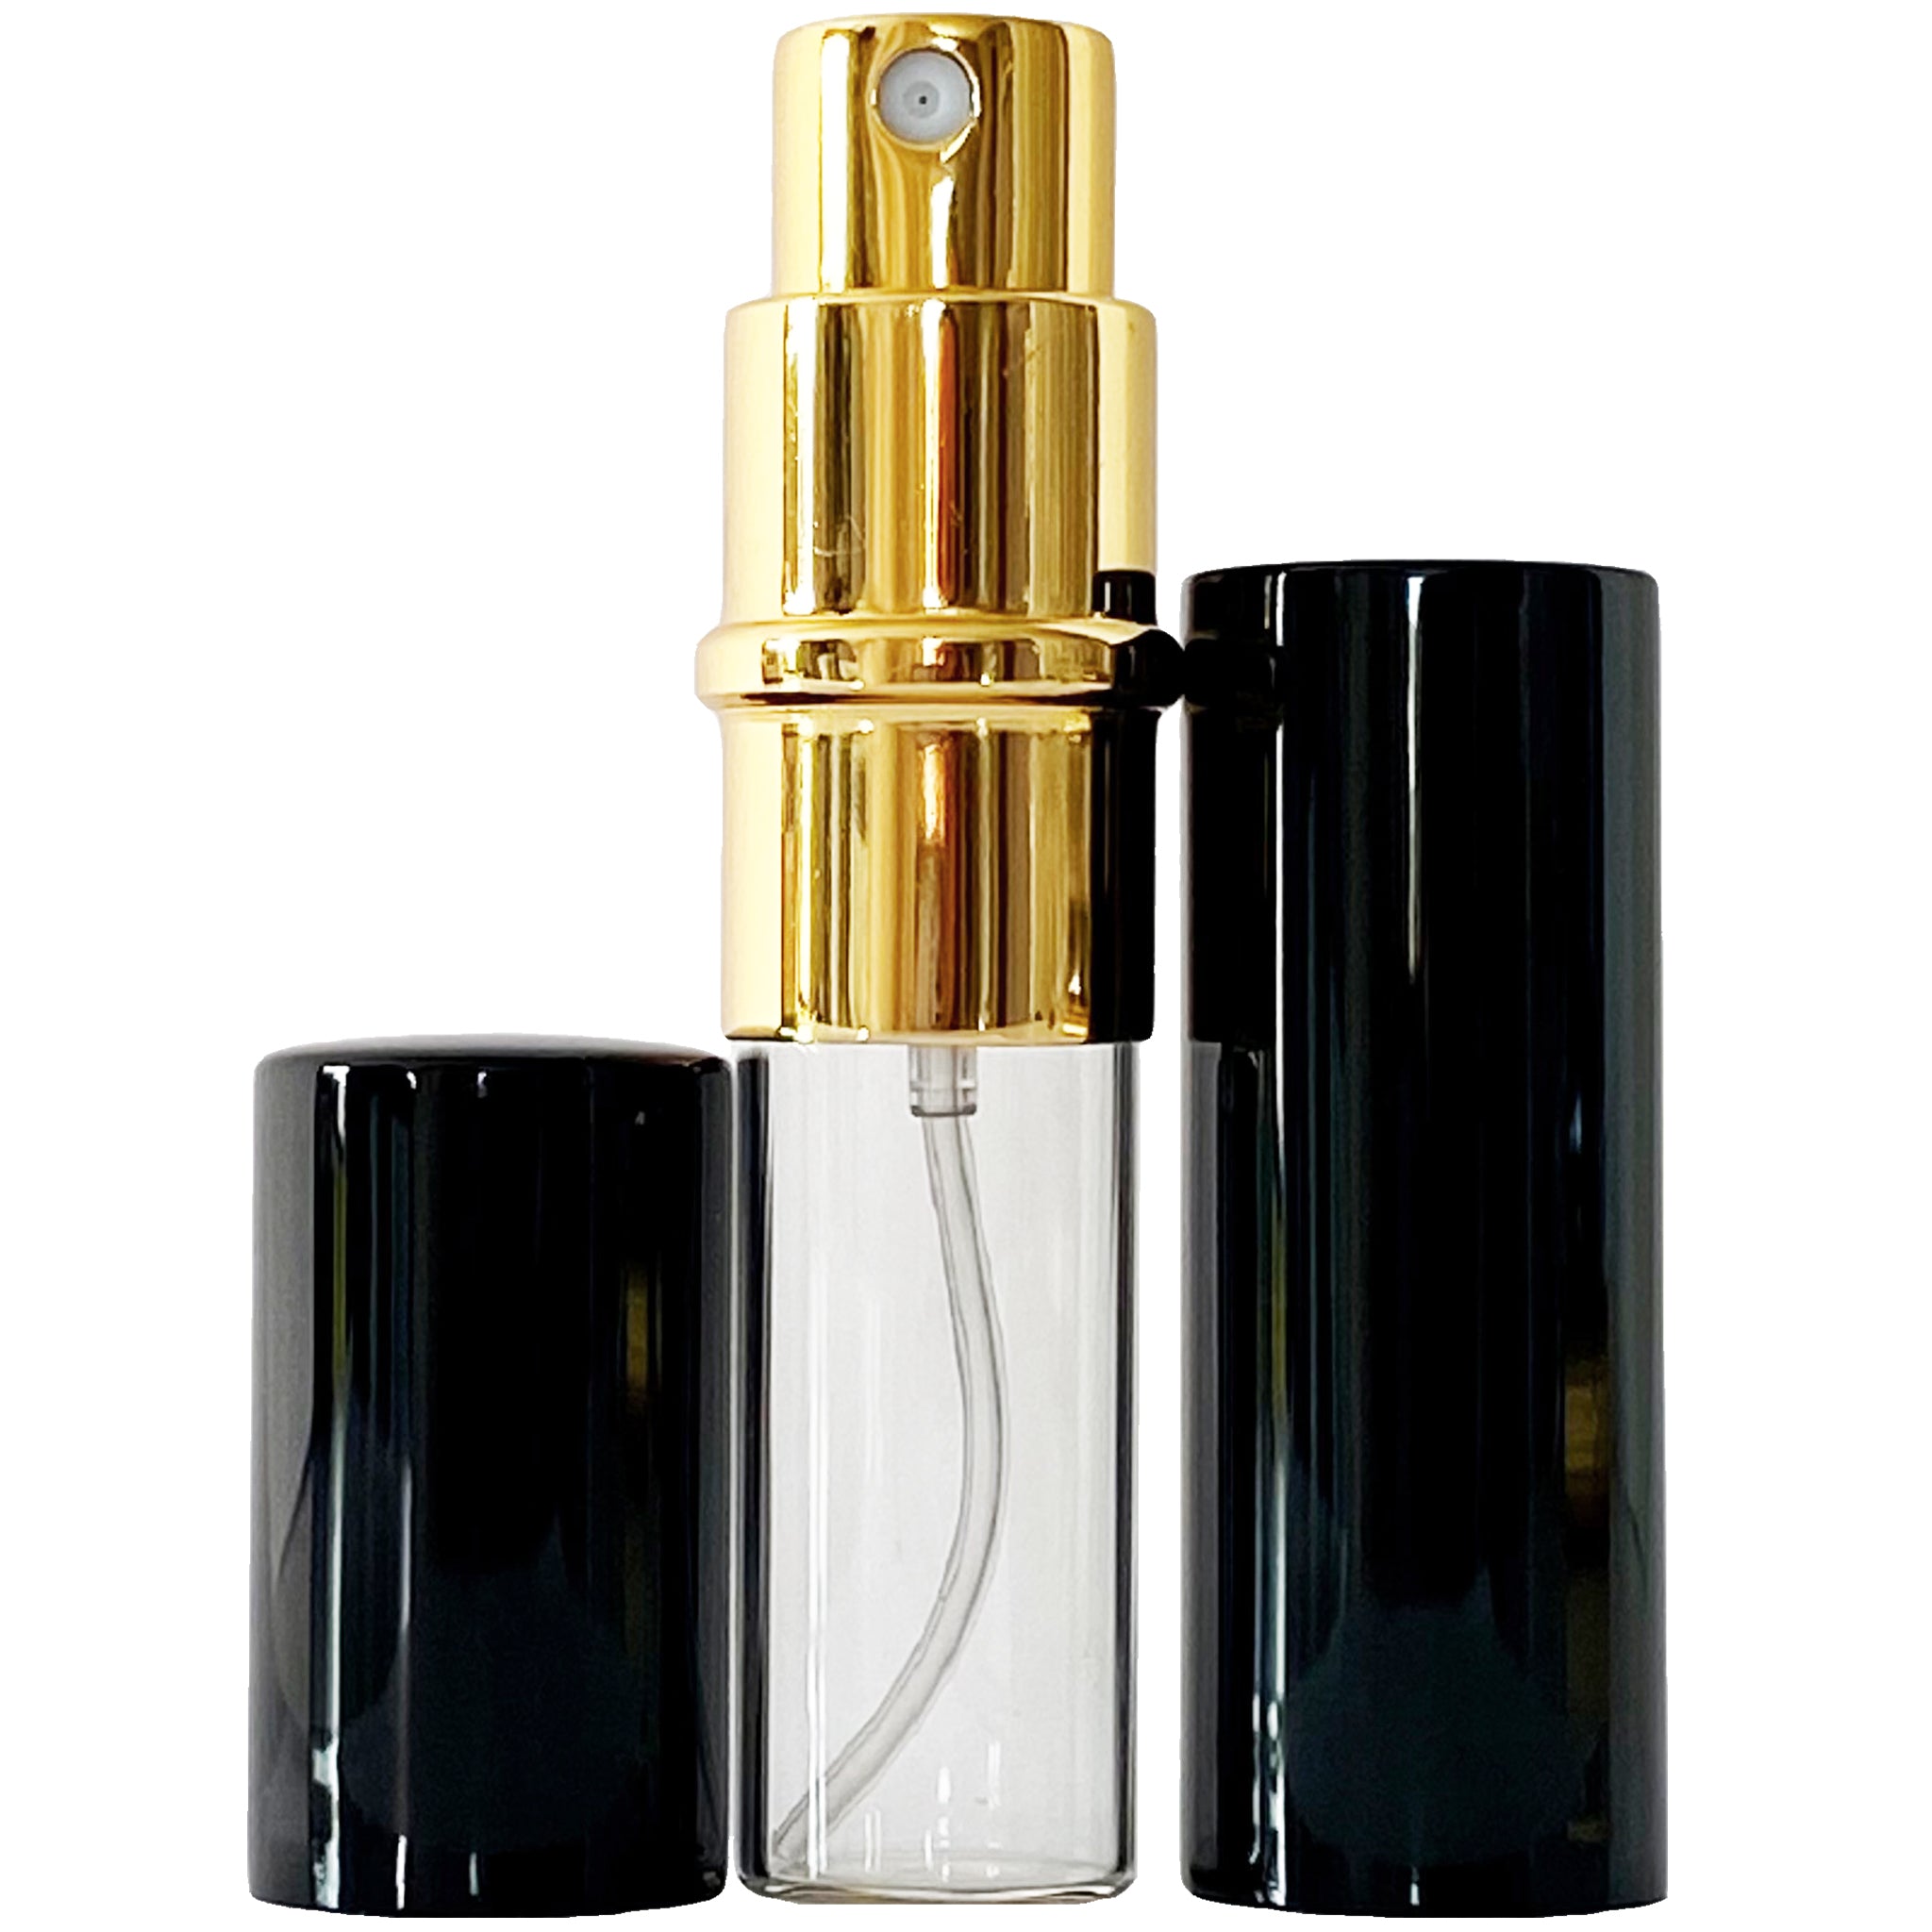 6ml 0.20oz Black Perfume Glass Spray Deluxe Bottles Gold Atomizers